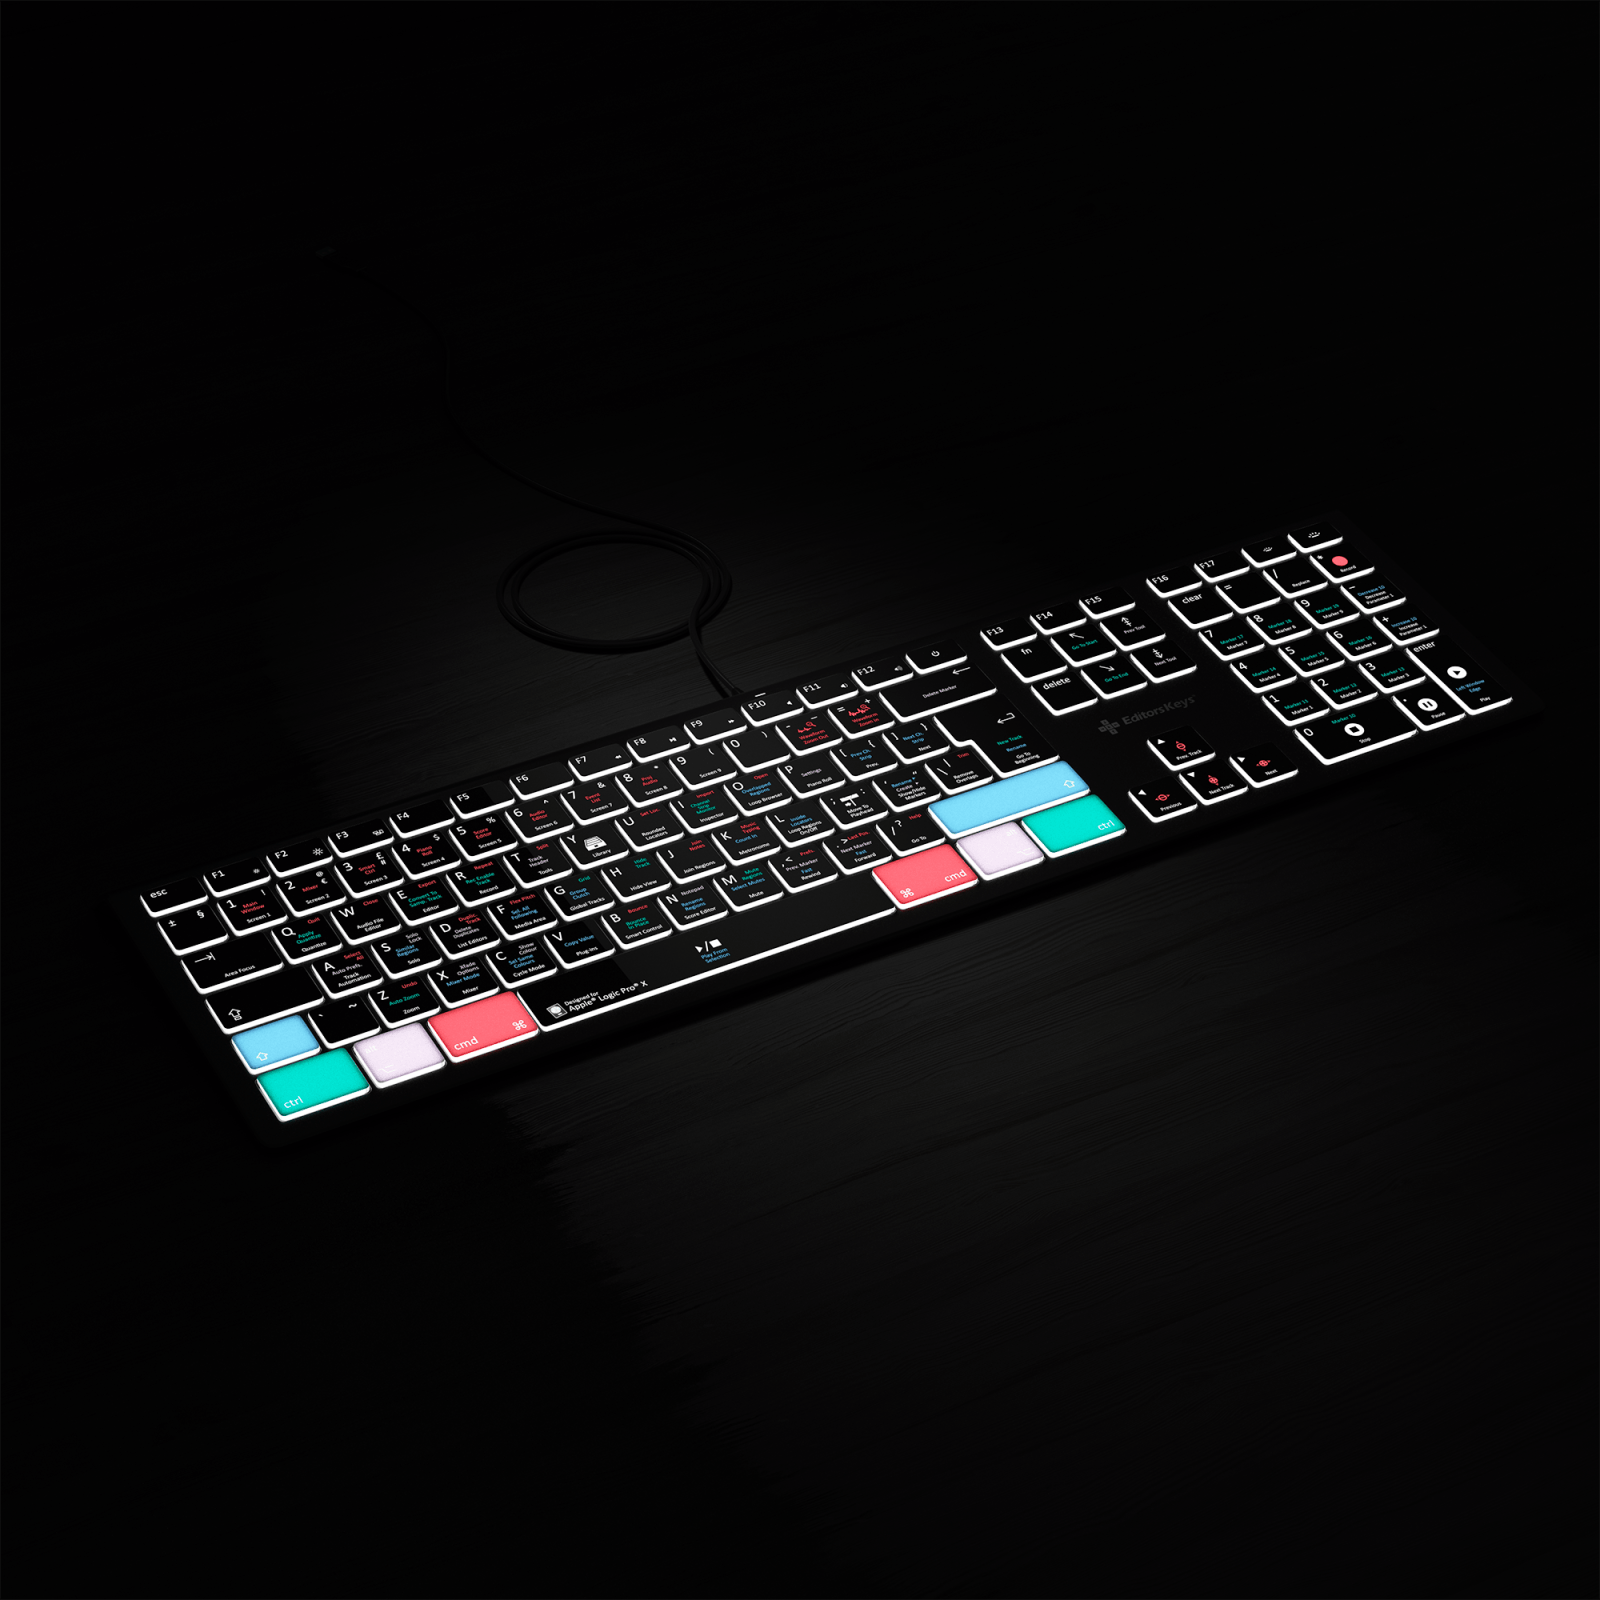 Logic Pro X Keyboard full shot with backlighting